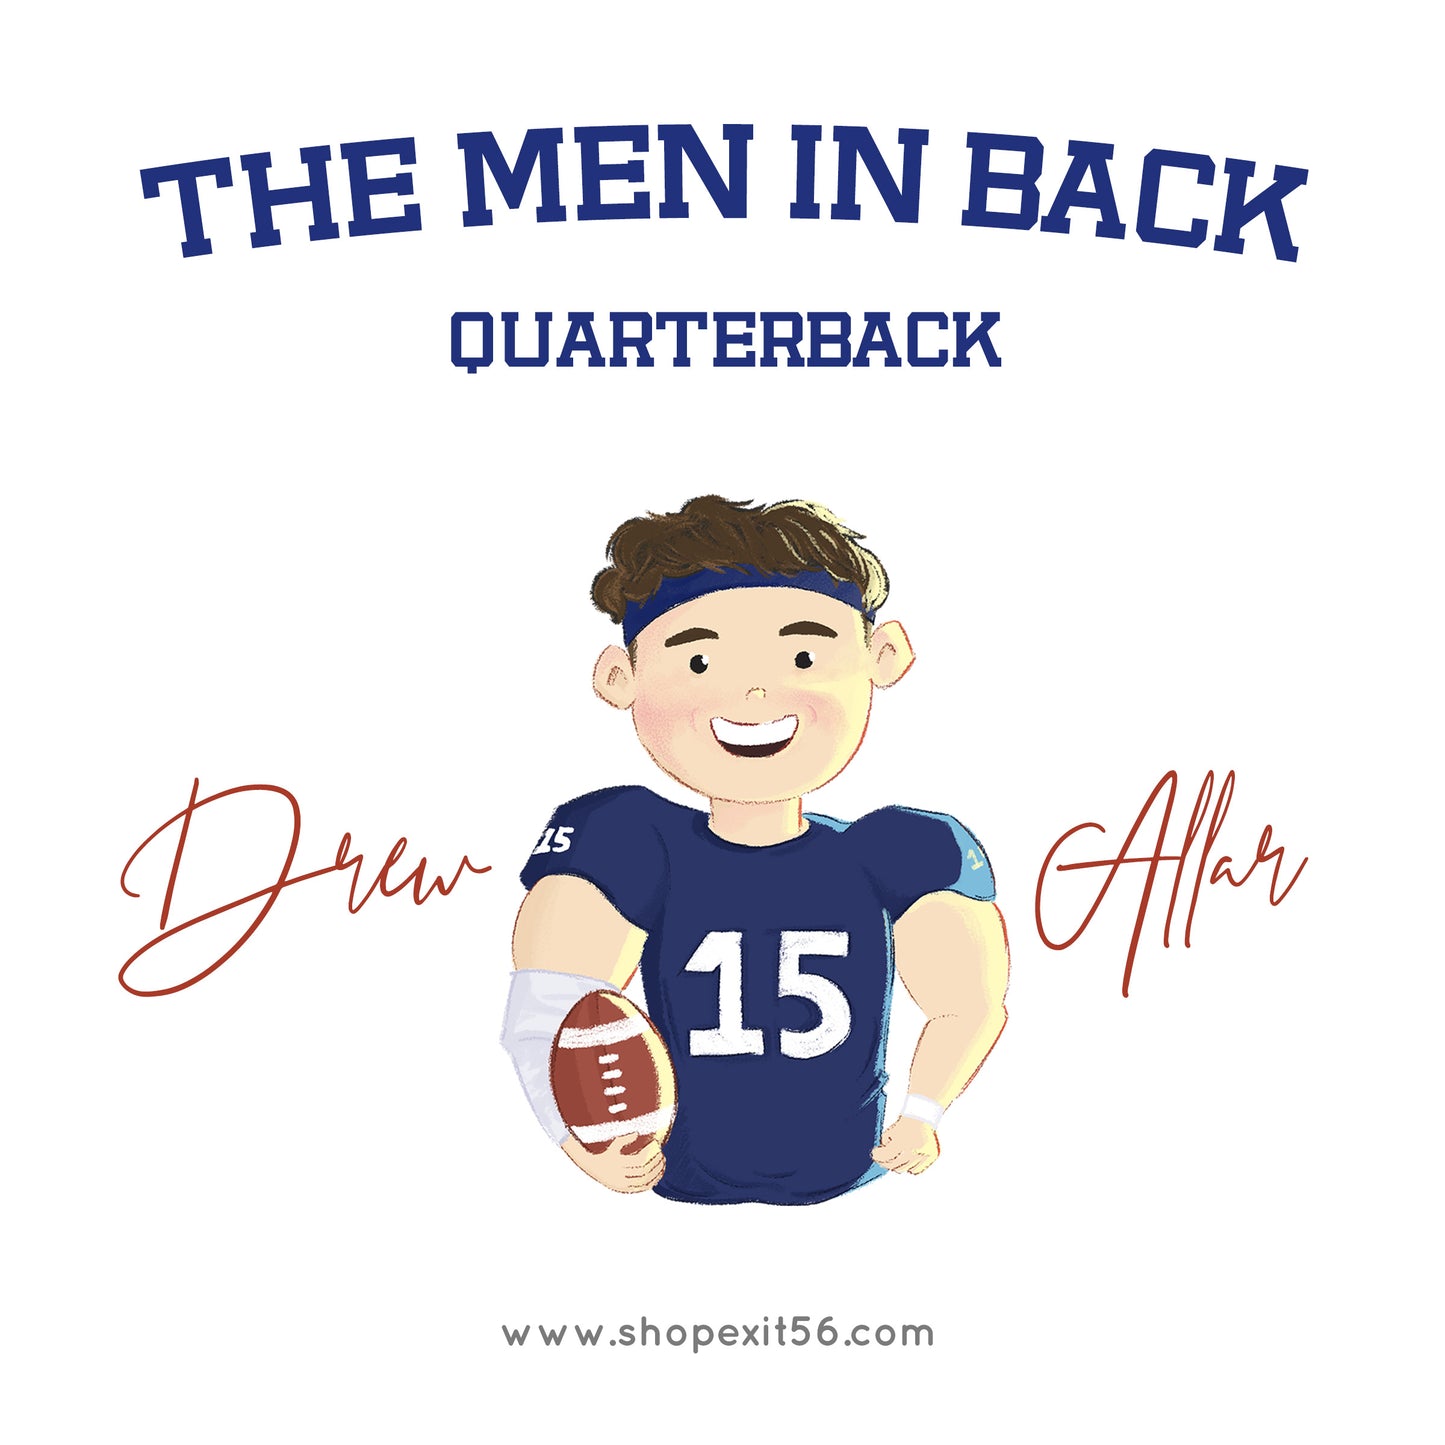 The Men In Back - Quarterback (Penn State)